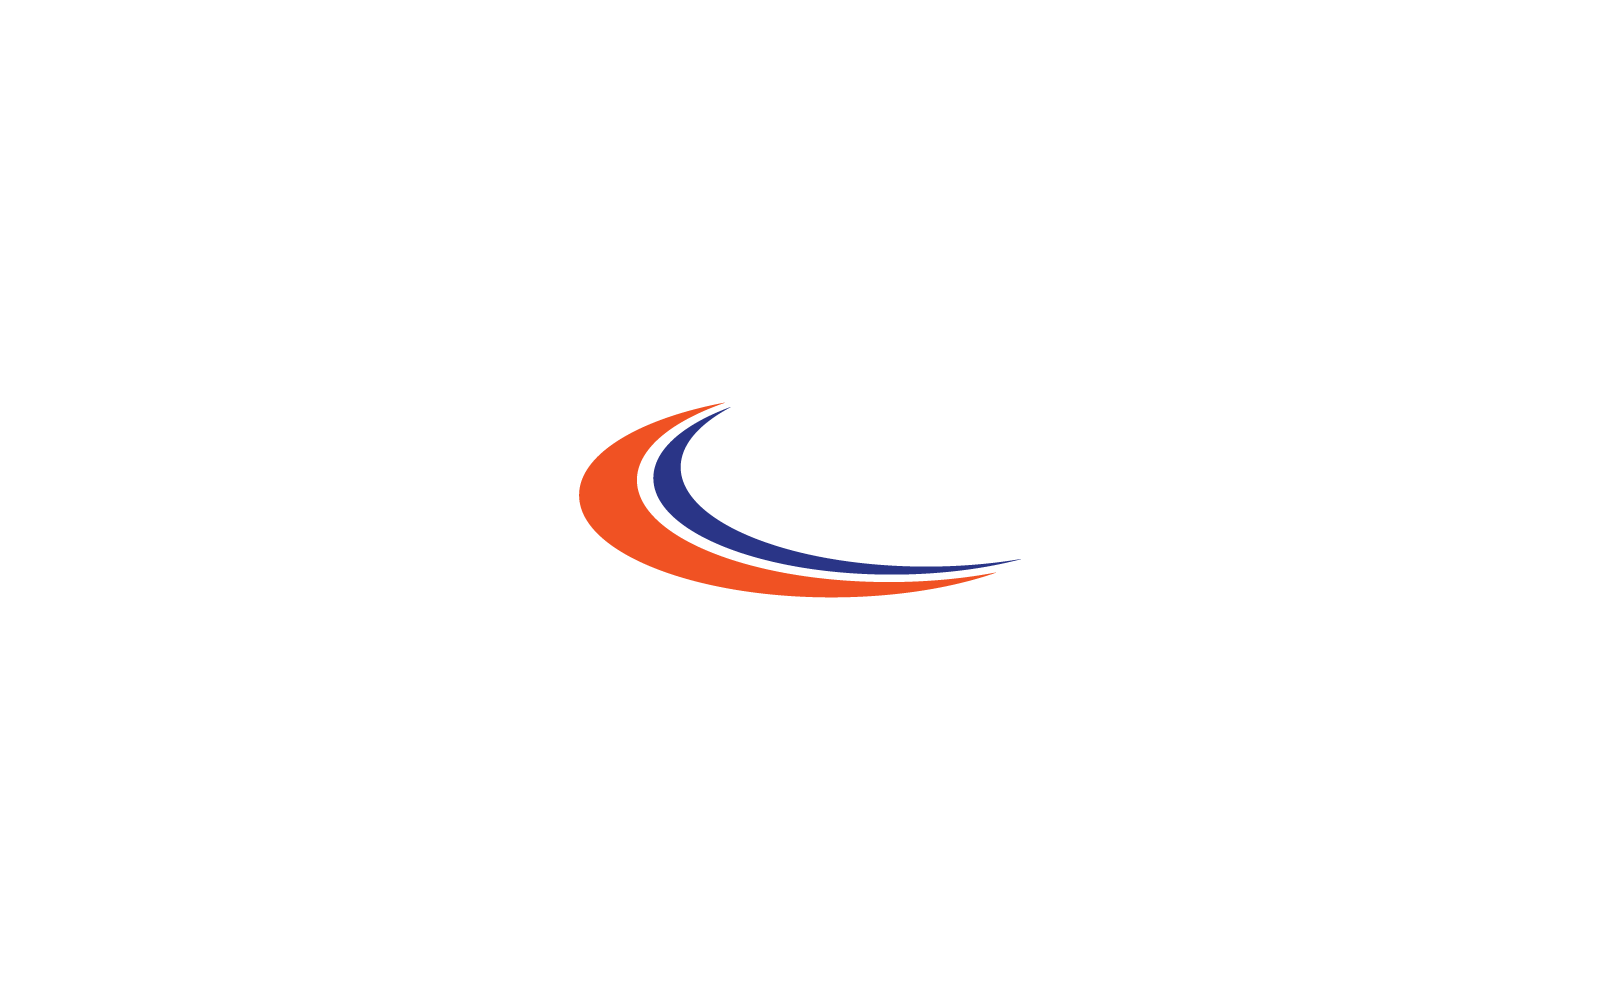 Swoosh logo illustration icon vector template